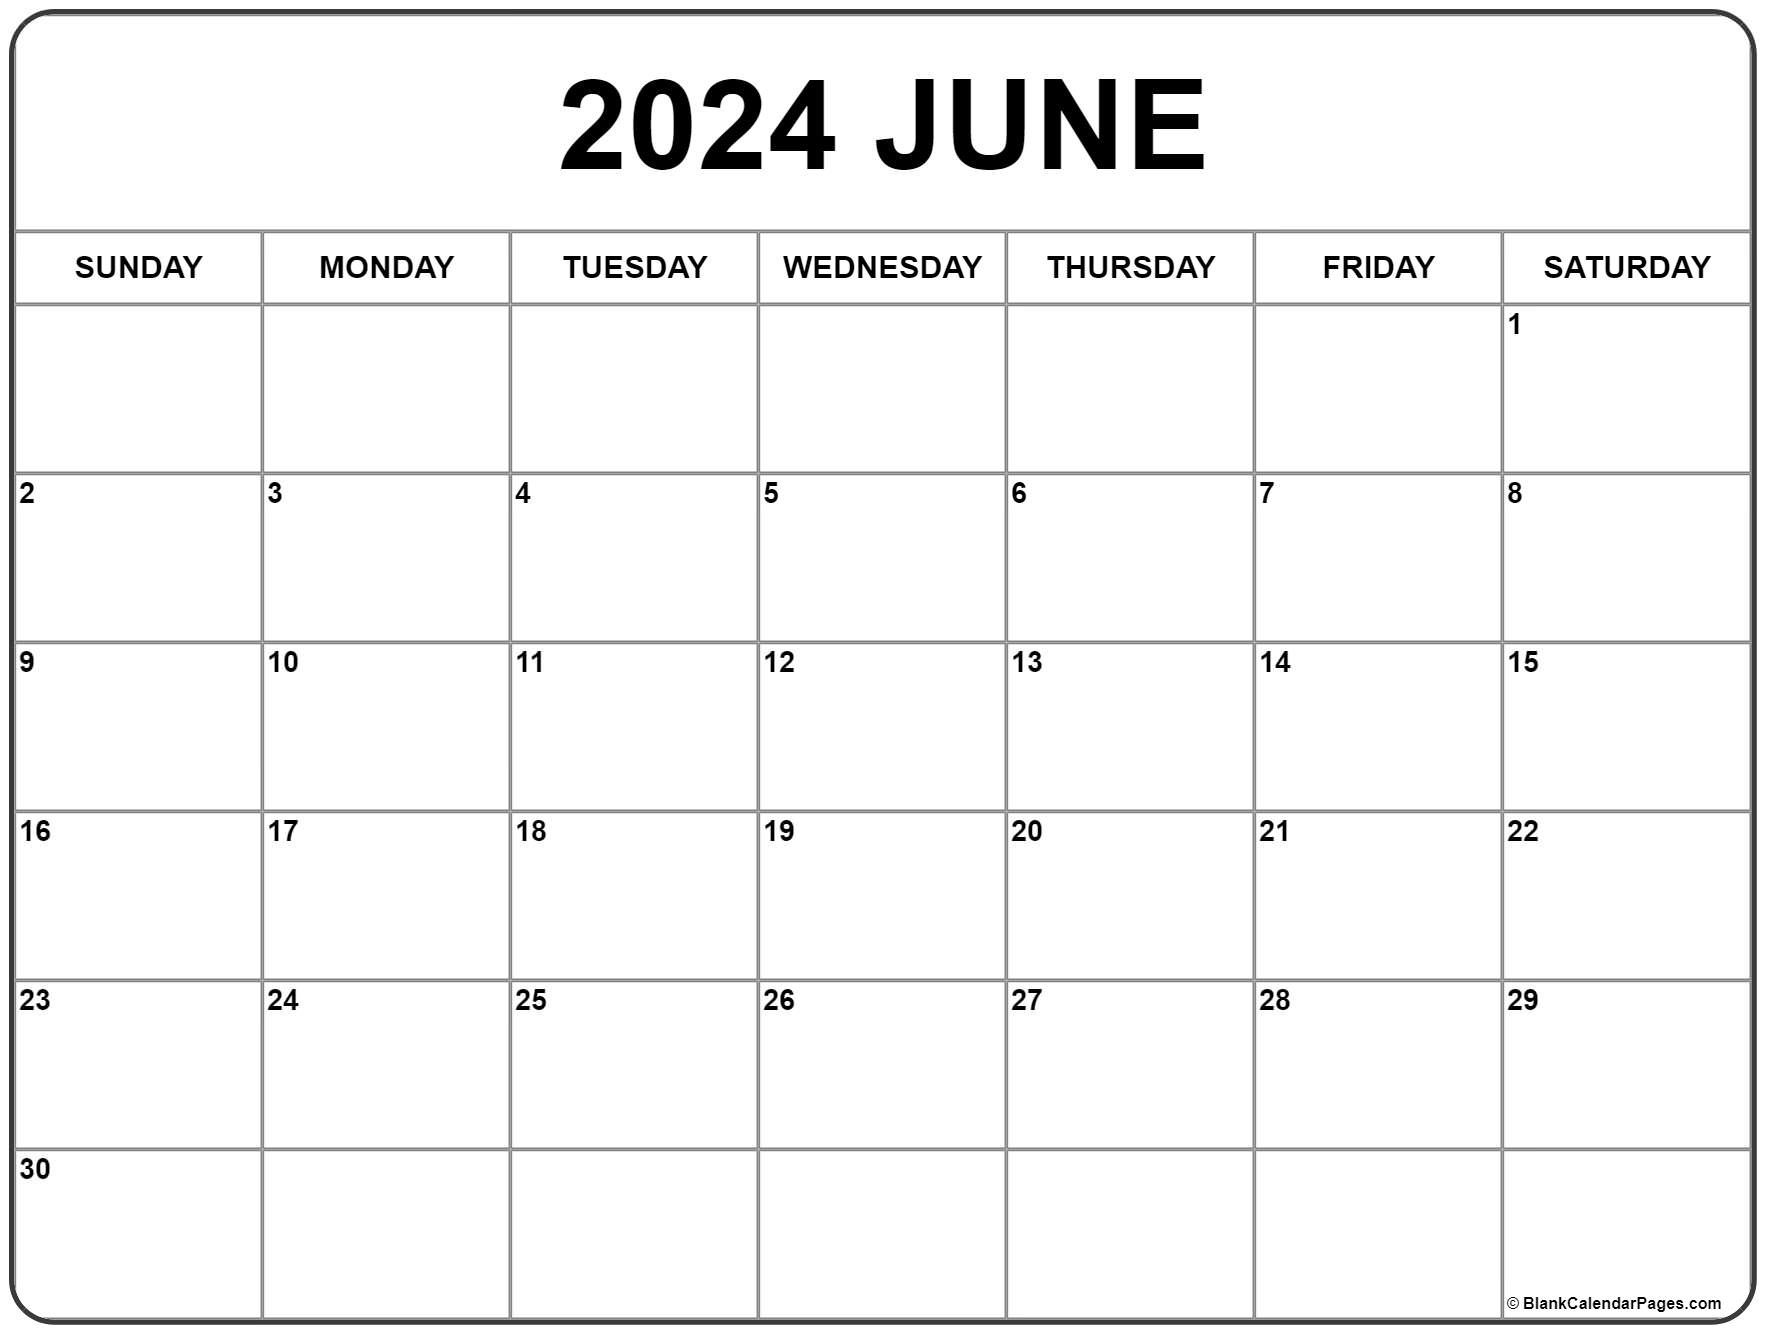 June 2024 Calendar | Free Printable Calendar | Free Printable Calendar 2024 June